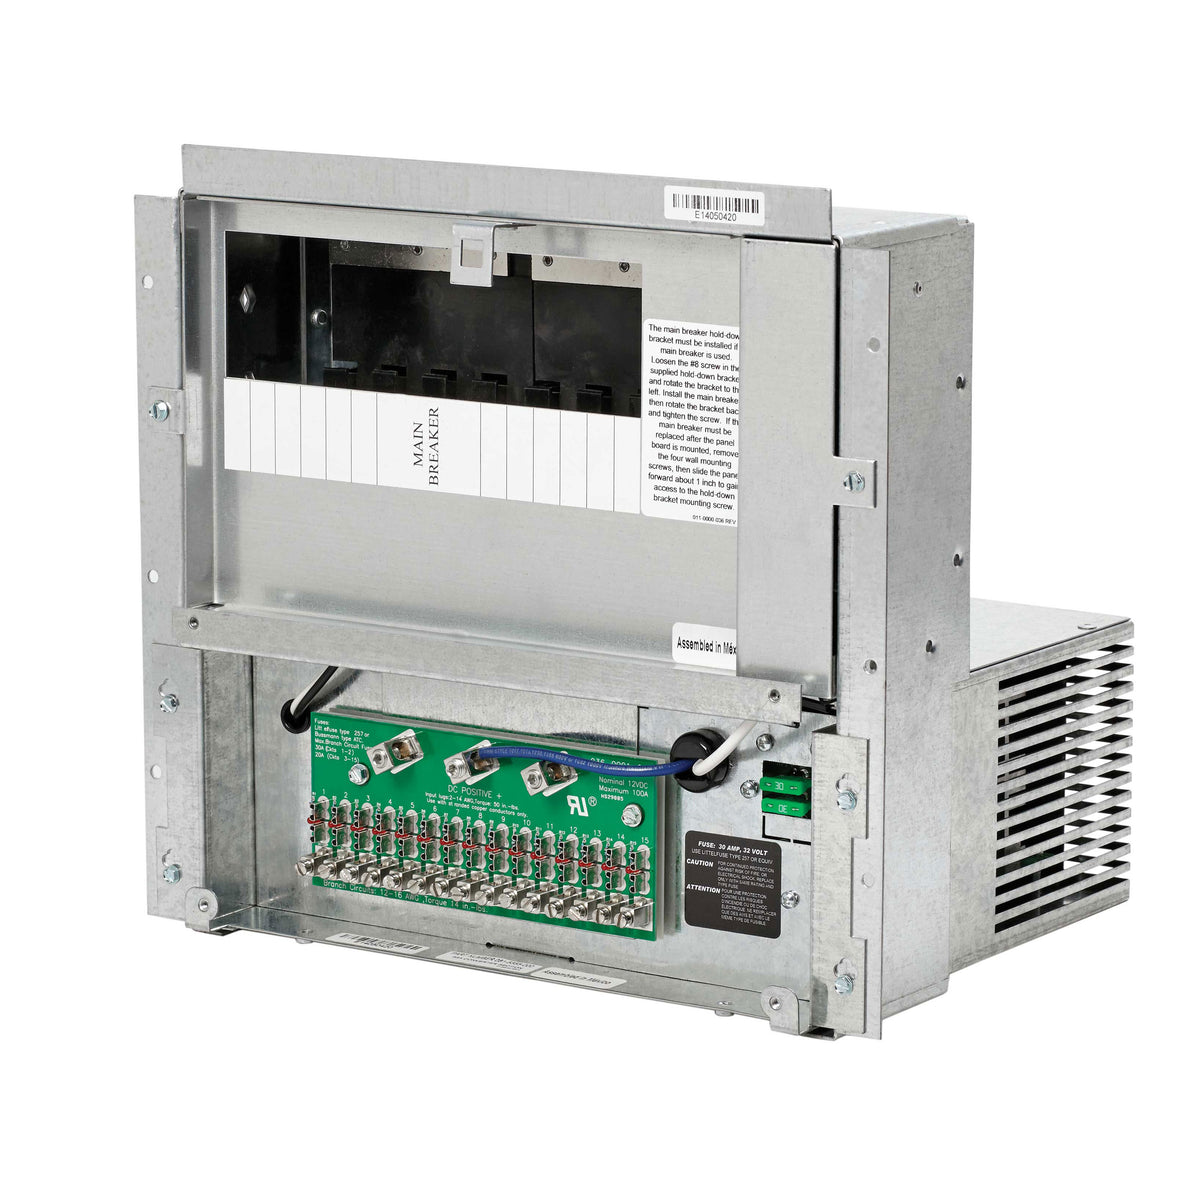 Parallax 5365 50A Power Center with 65A Converter